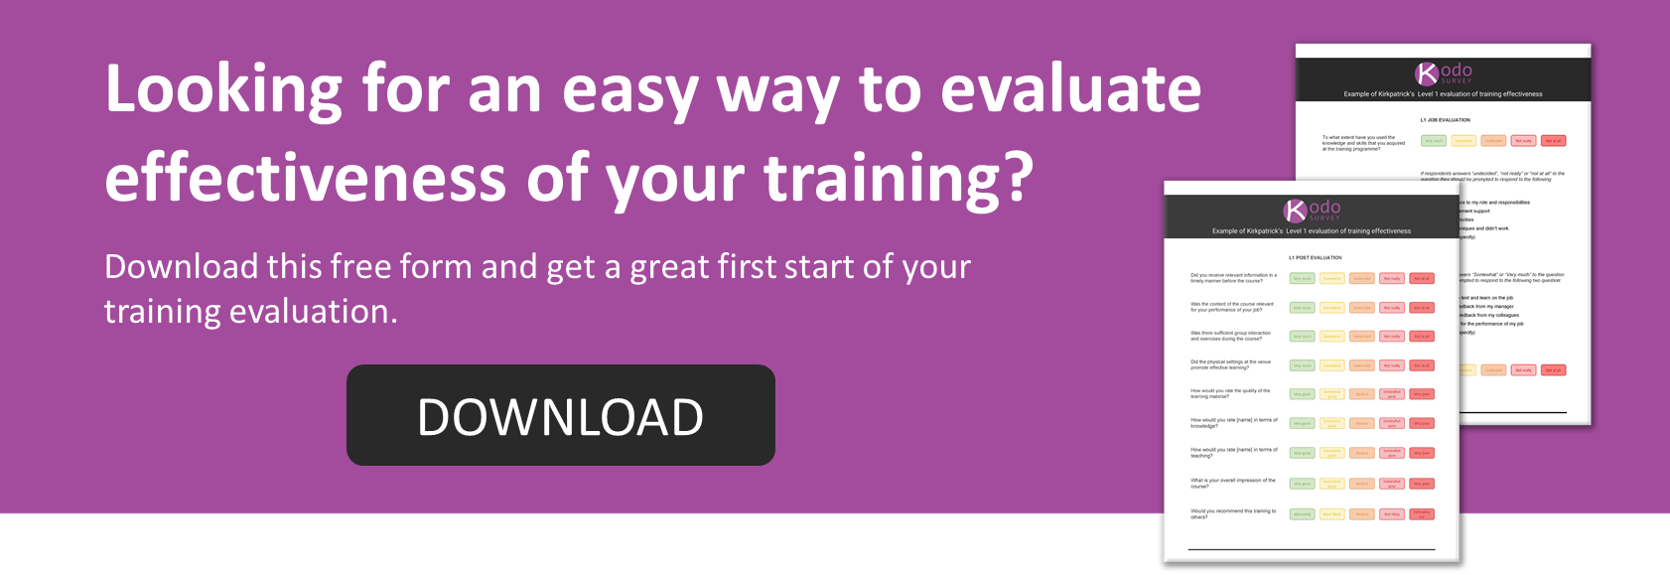 evaluating training effectiveness